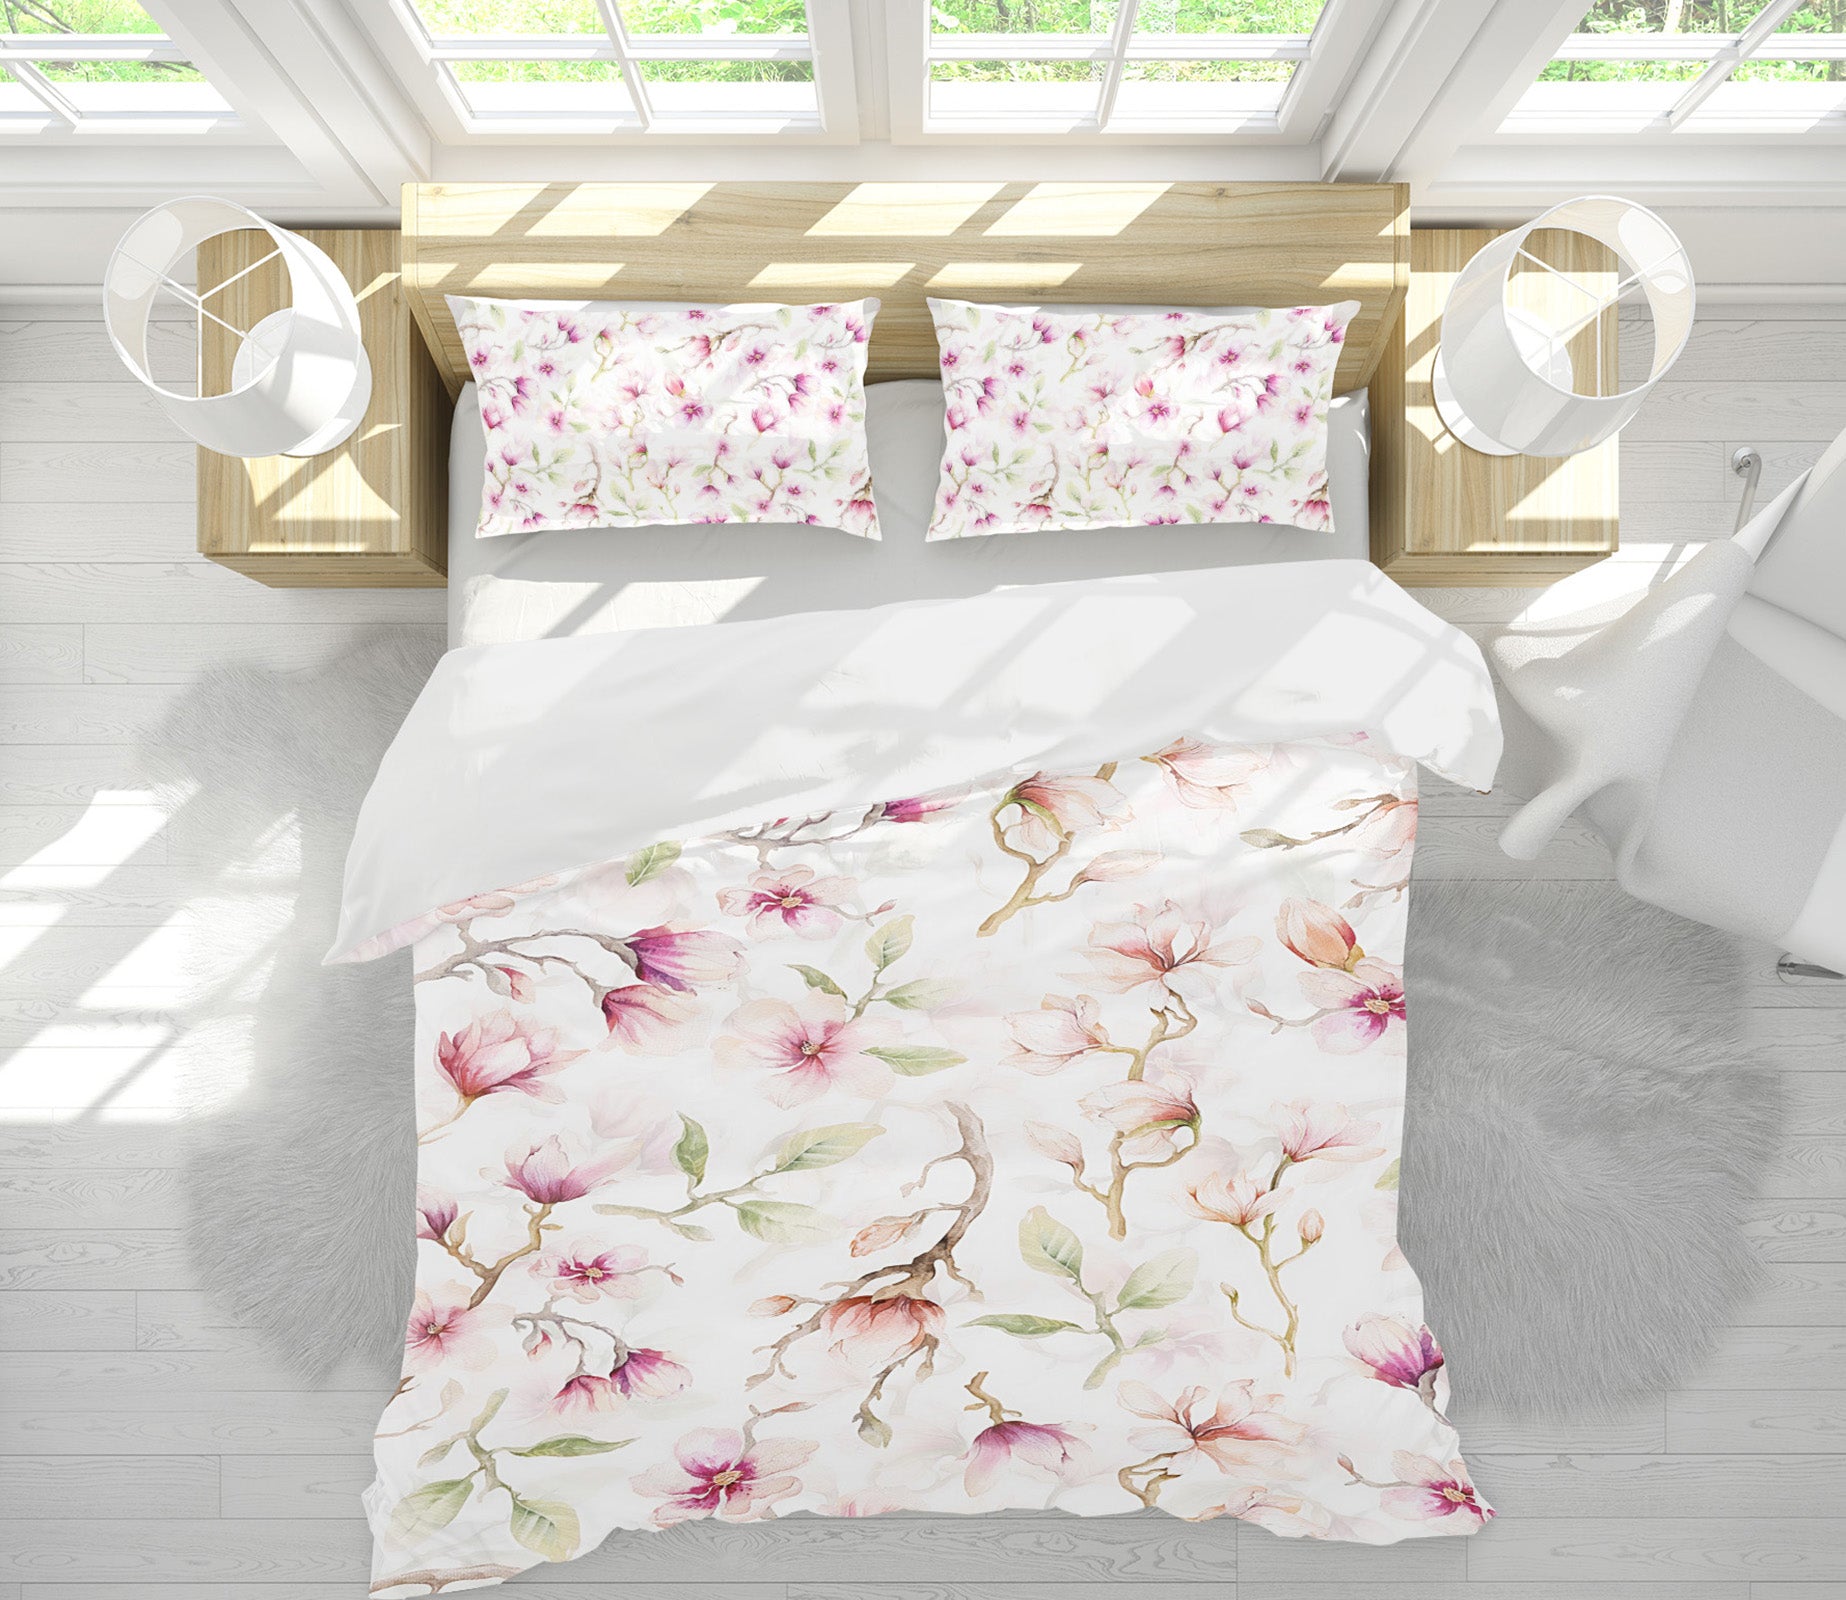 3D Lily Leaves 081 Uta Naumann Bedding Bed Pillowcases Quilt